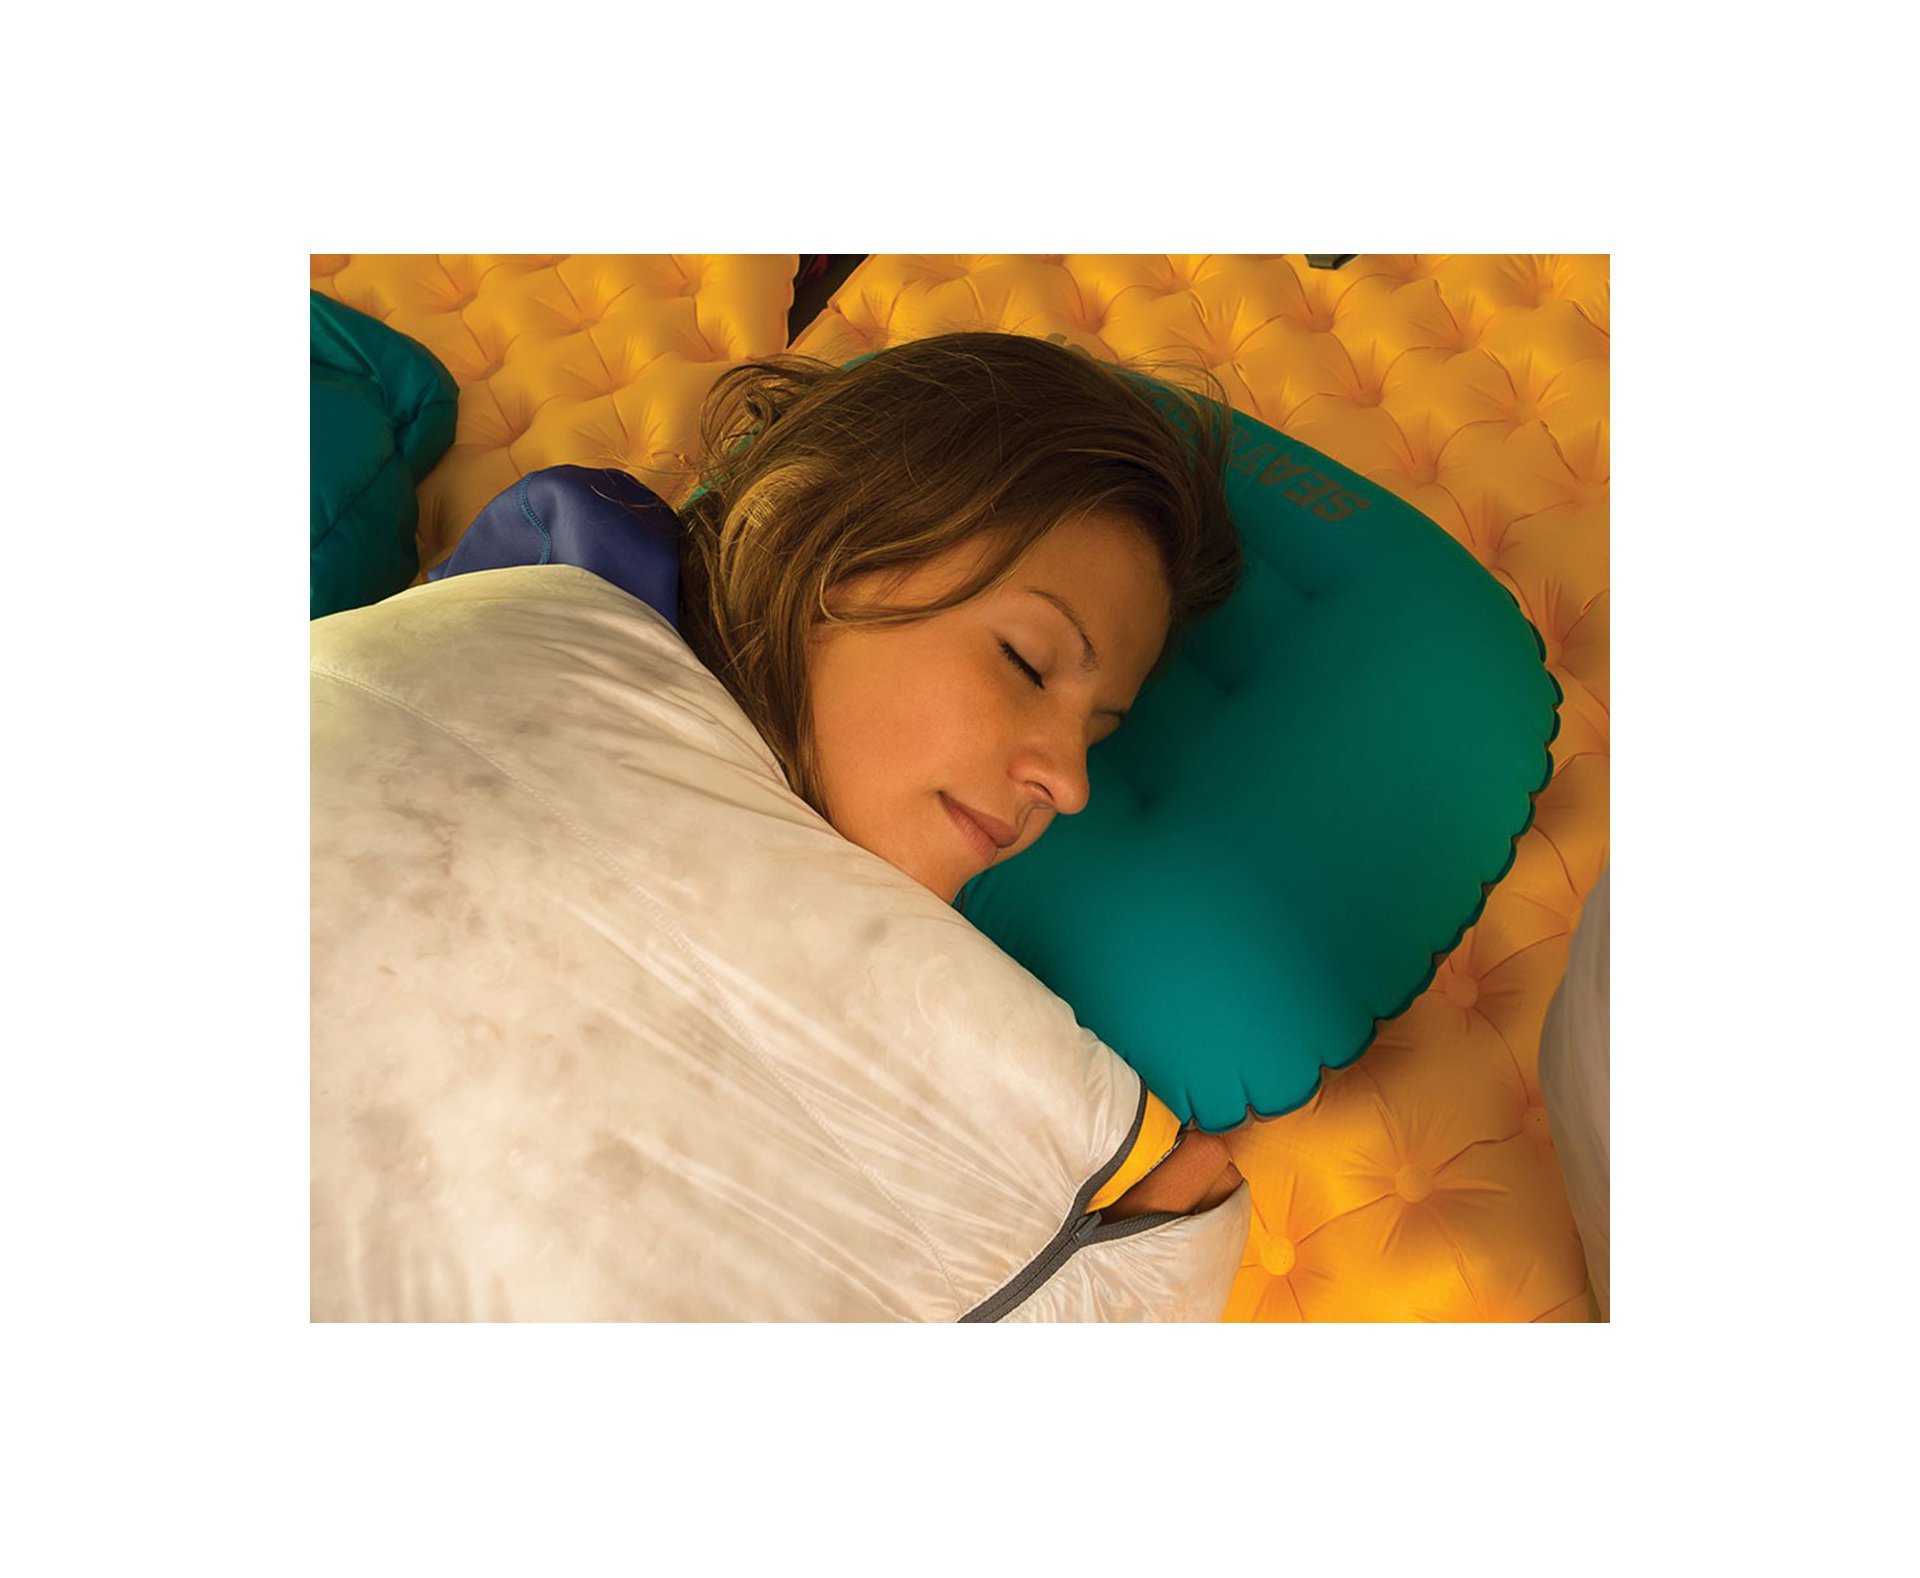 Travesseiro Sea To Summit Pillow Ultralight Large Azul E Cinza